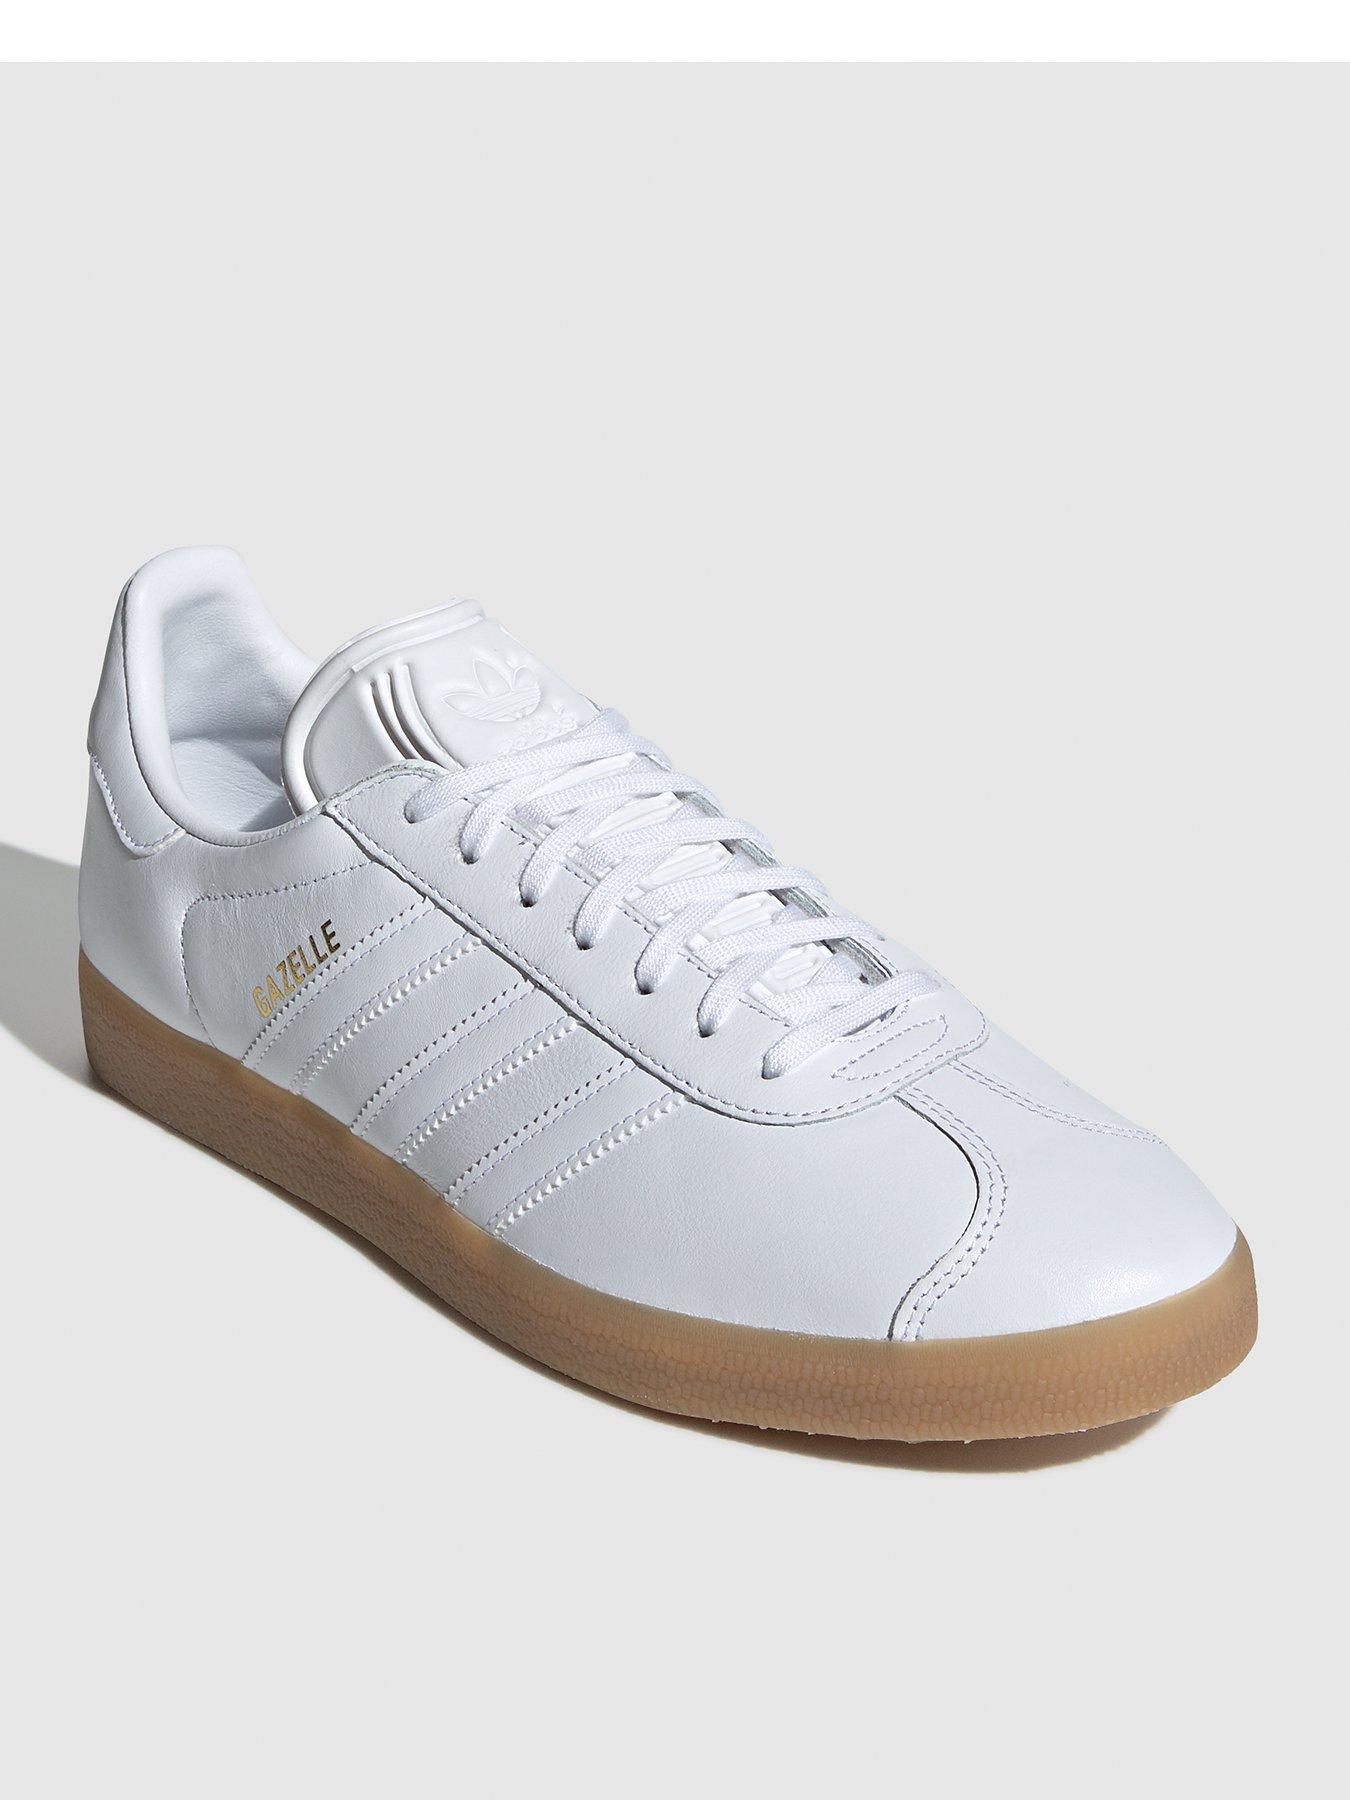 adidas gazelle white trainers